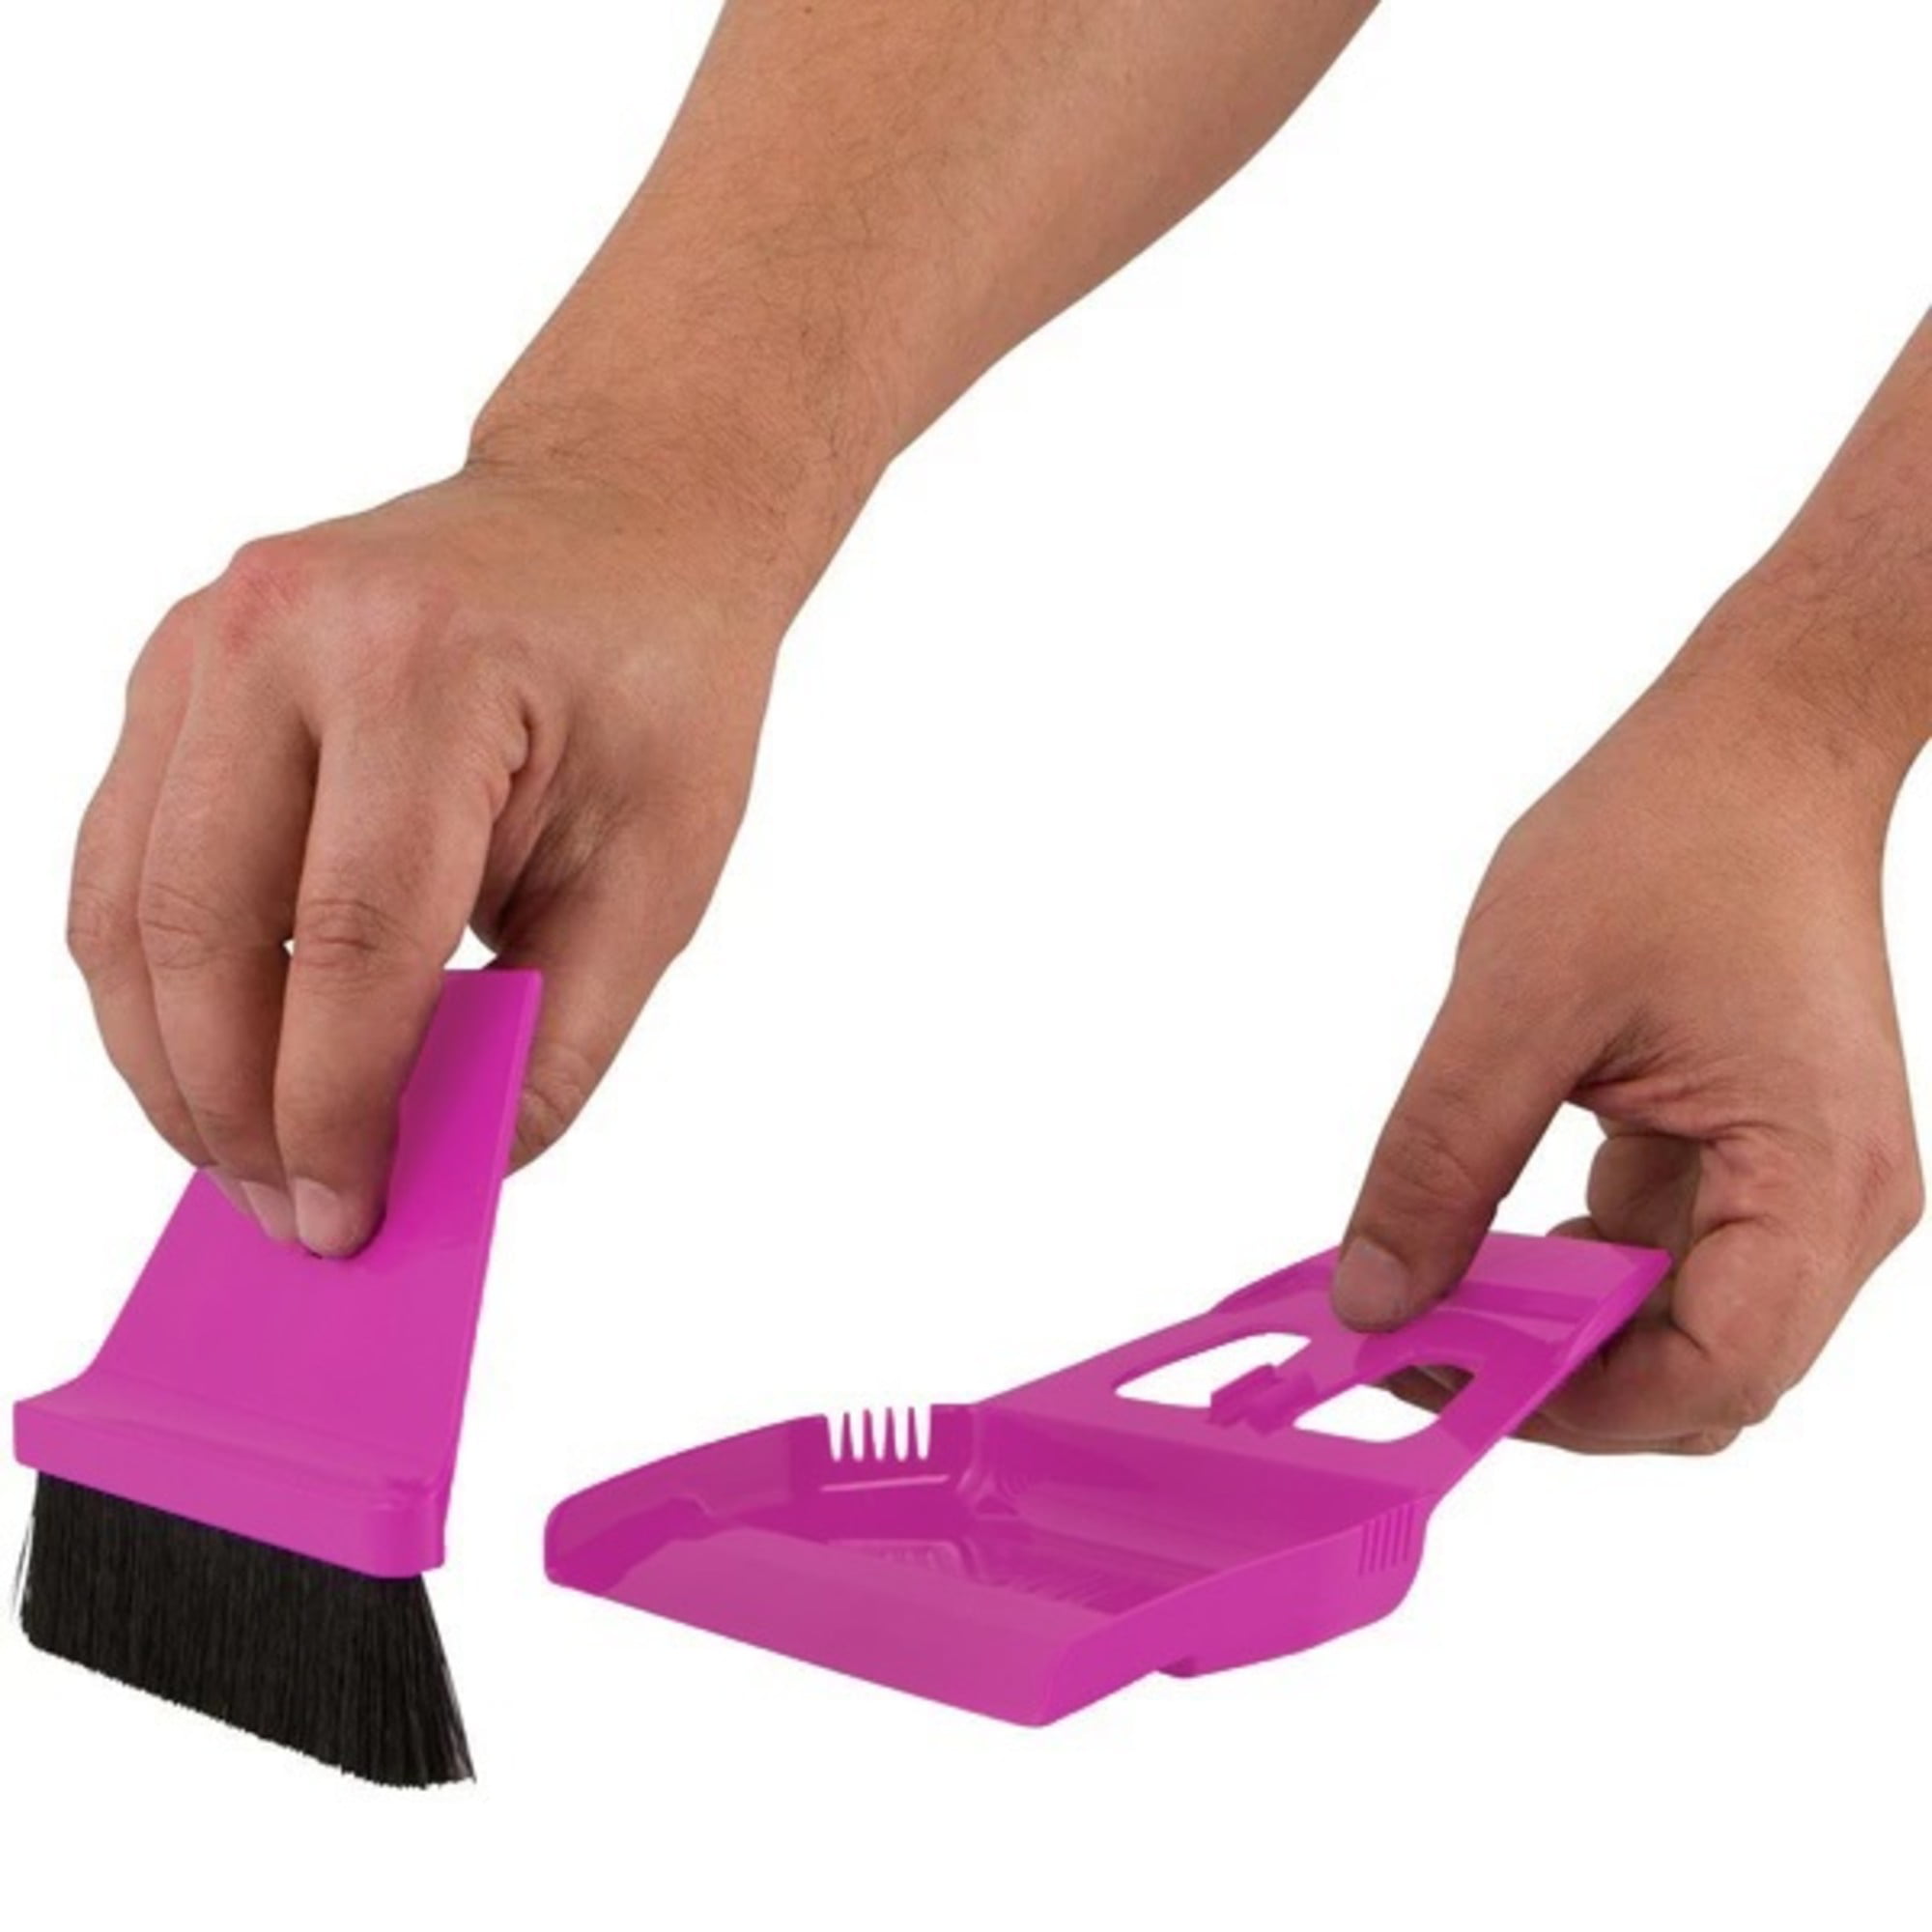 miniWISP Small Broom and Dustpan Set The Best Mini Hand Broom with Electrostatic Bristle Seal